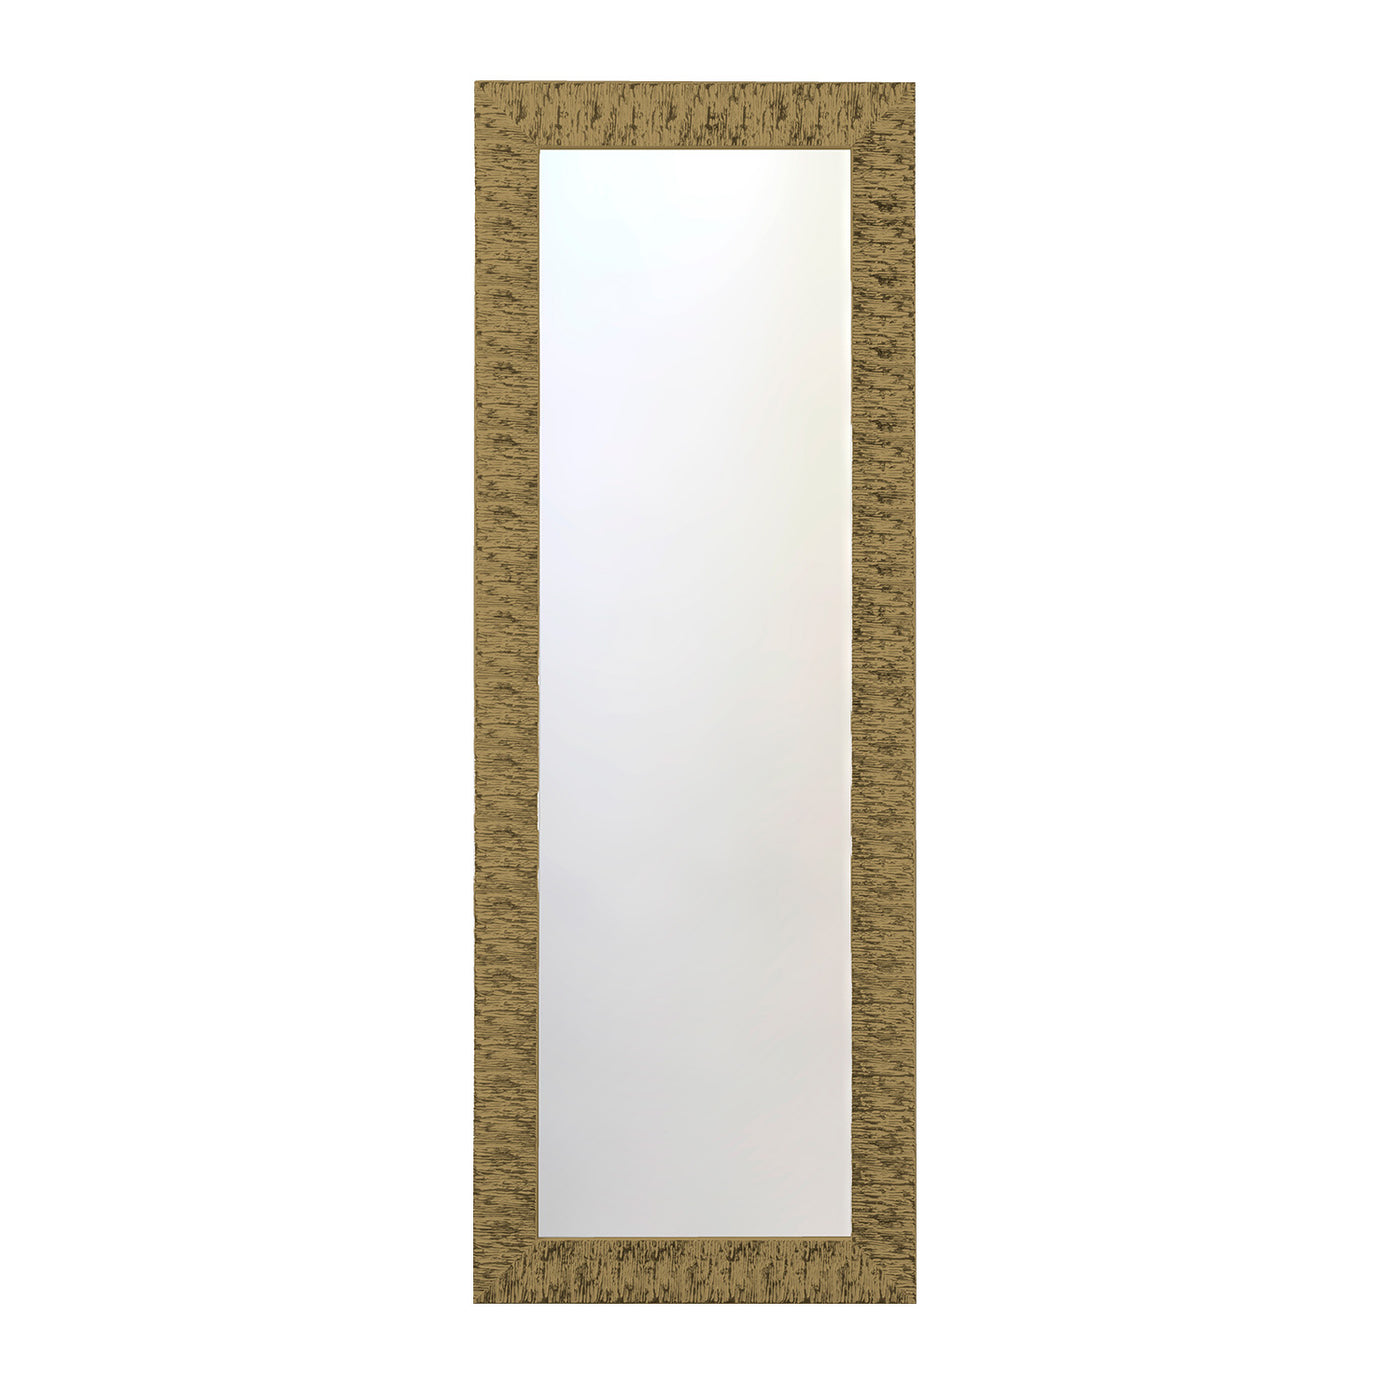 MINSK black/gold wall mirror